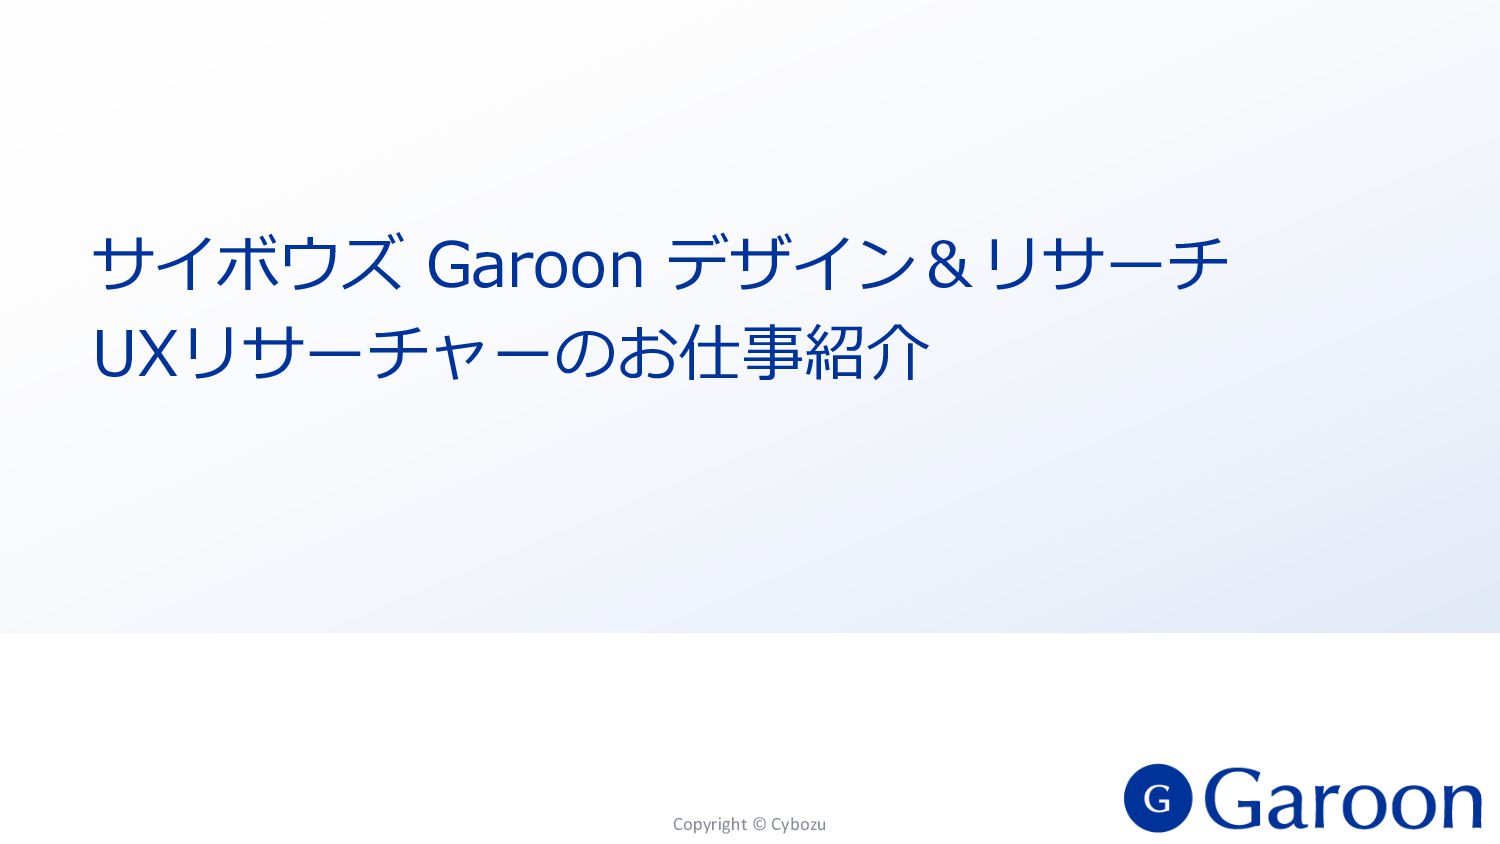 Slide Top: GaroonUX リサーチャーお仕事紹介 / GaroonUX Researcher Job Introduction